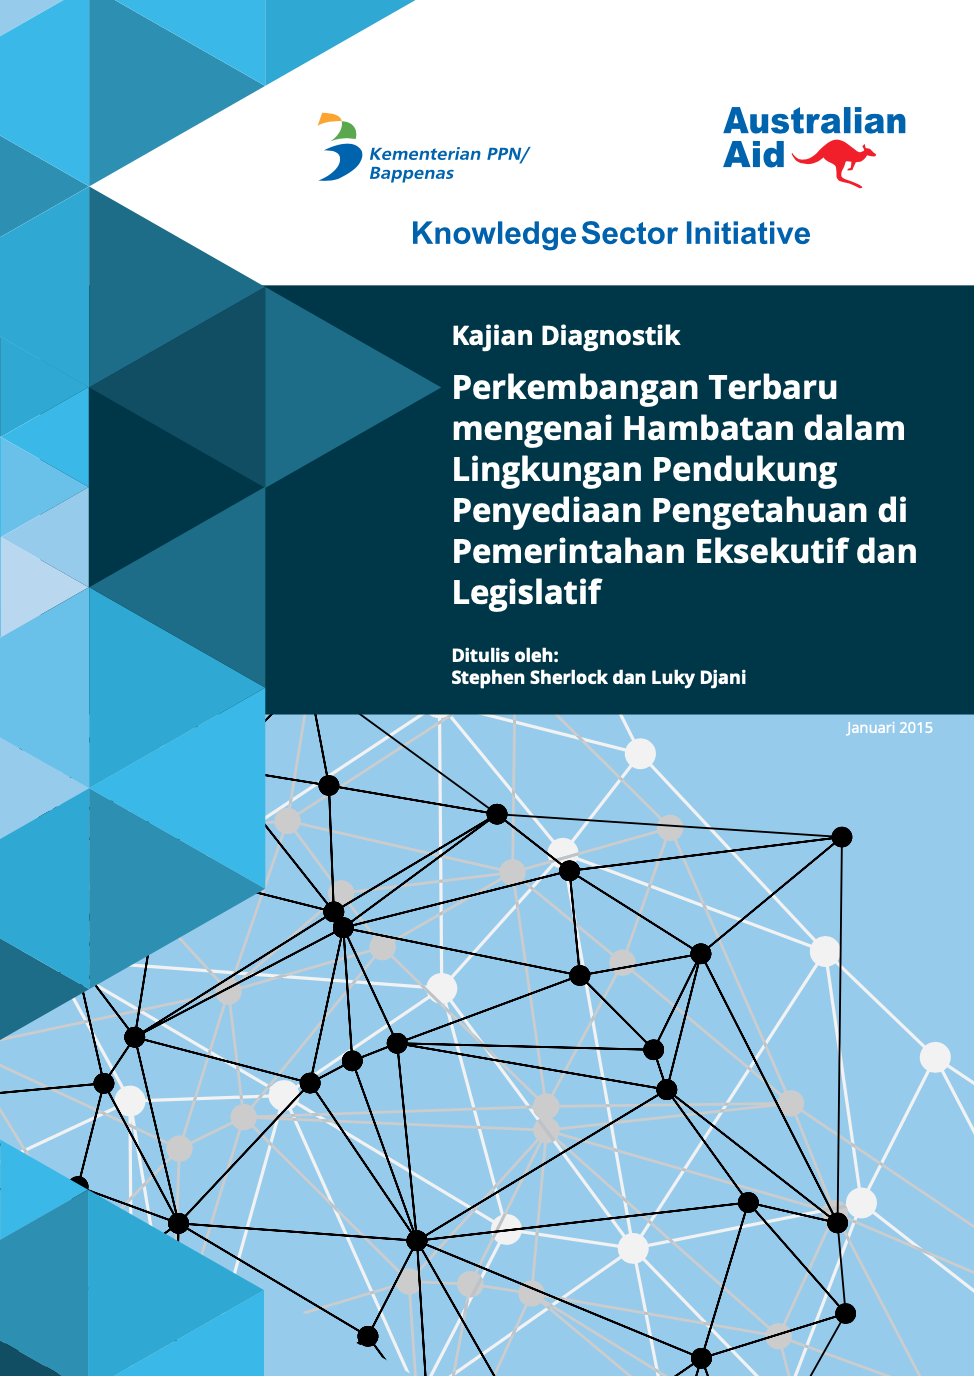 Perkembangan Terbaru mengenai Hambatan dalam Lingkungan Pendukung Penyediaan Pengetahuan di Pemerintahan Eksekutif dan Legislatif